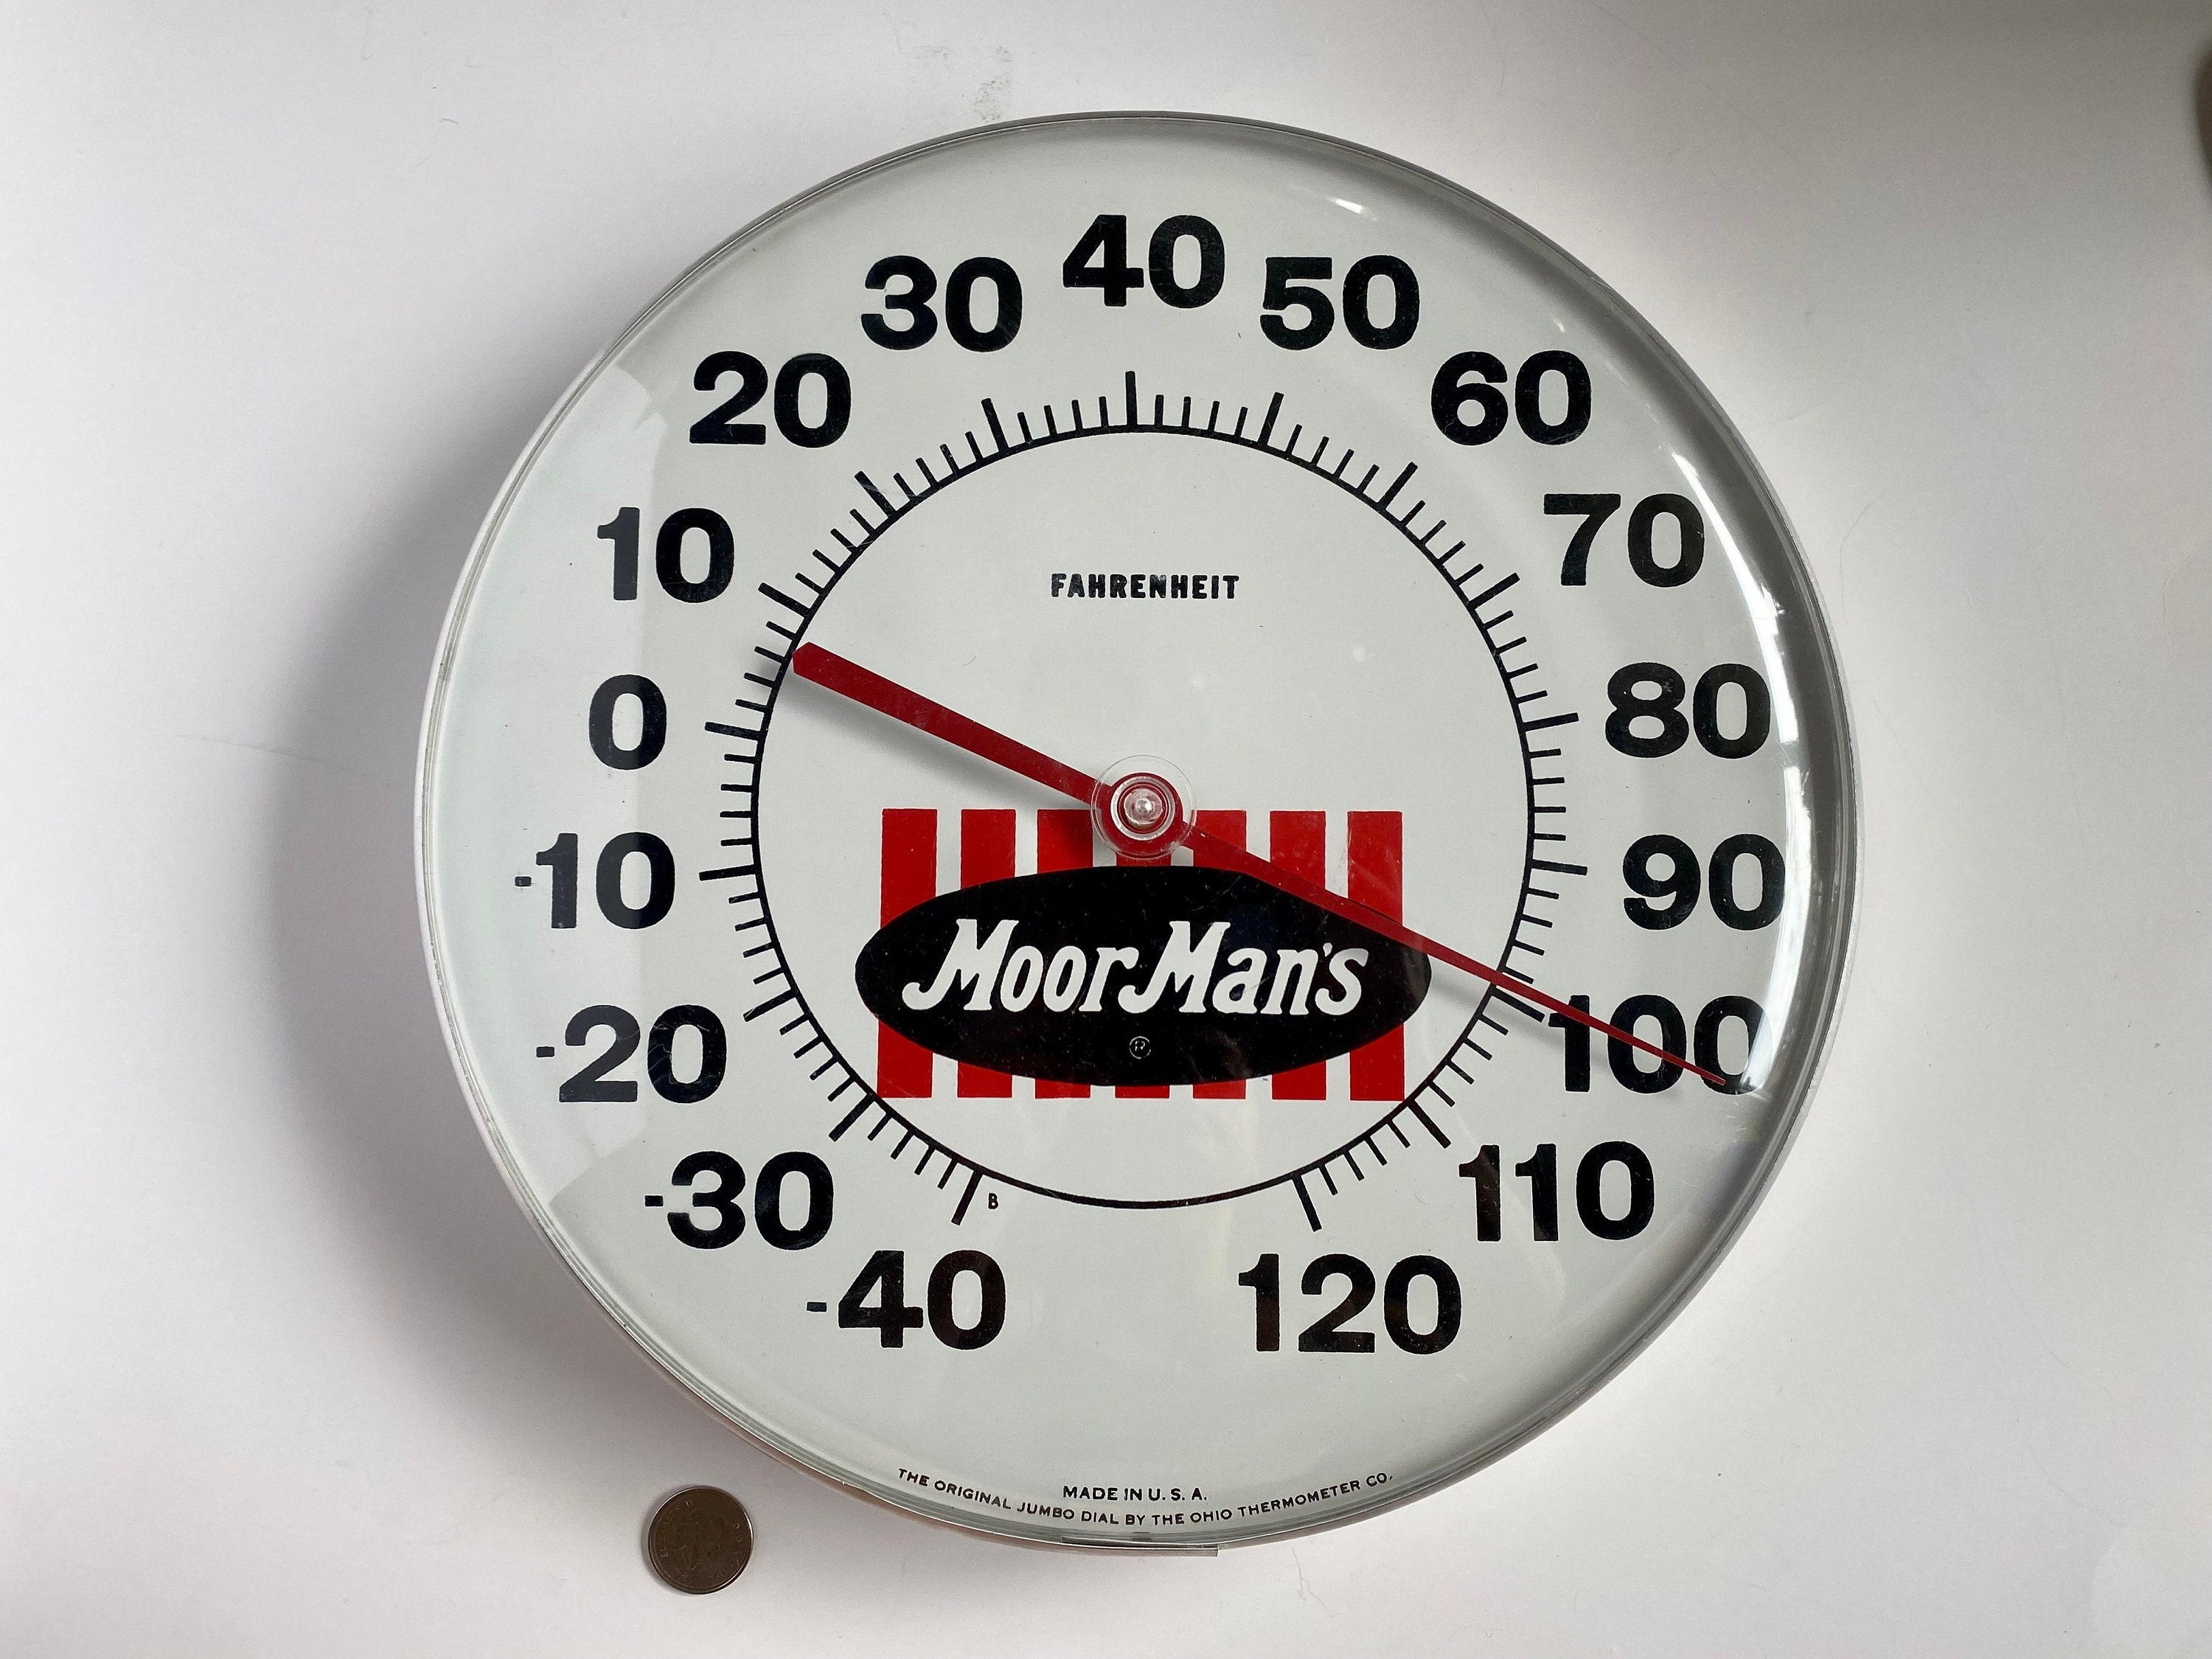 Thermomètre deco GARAGE style vintage